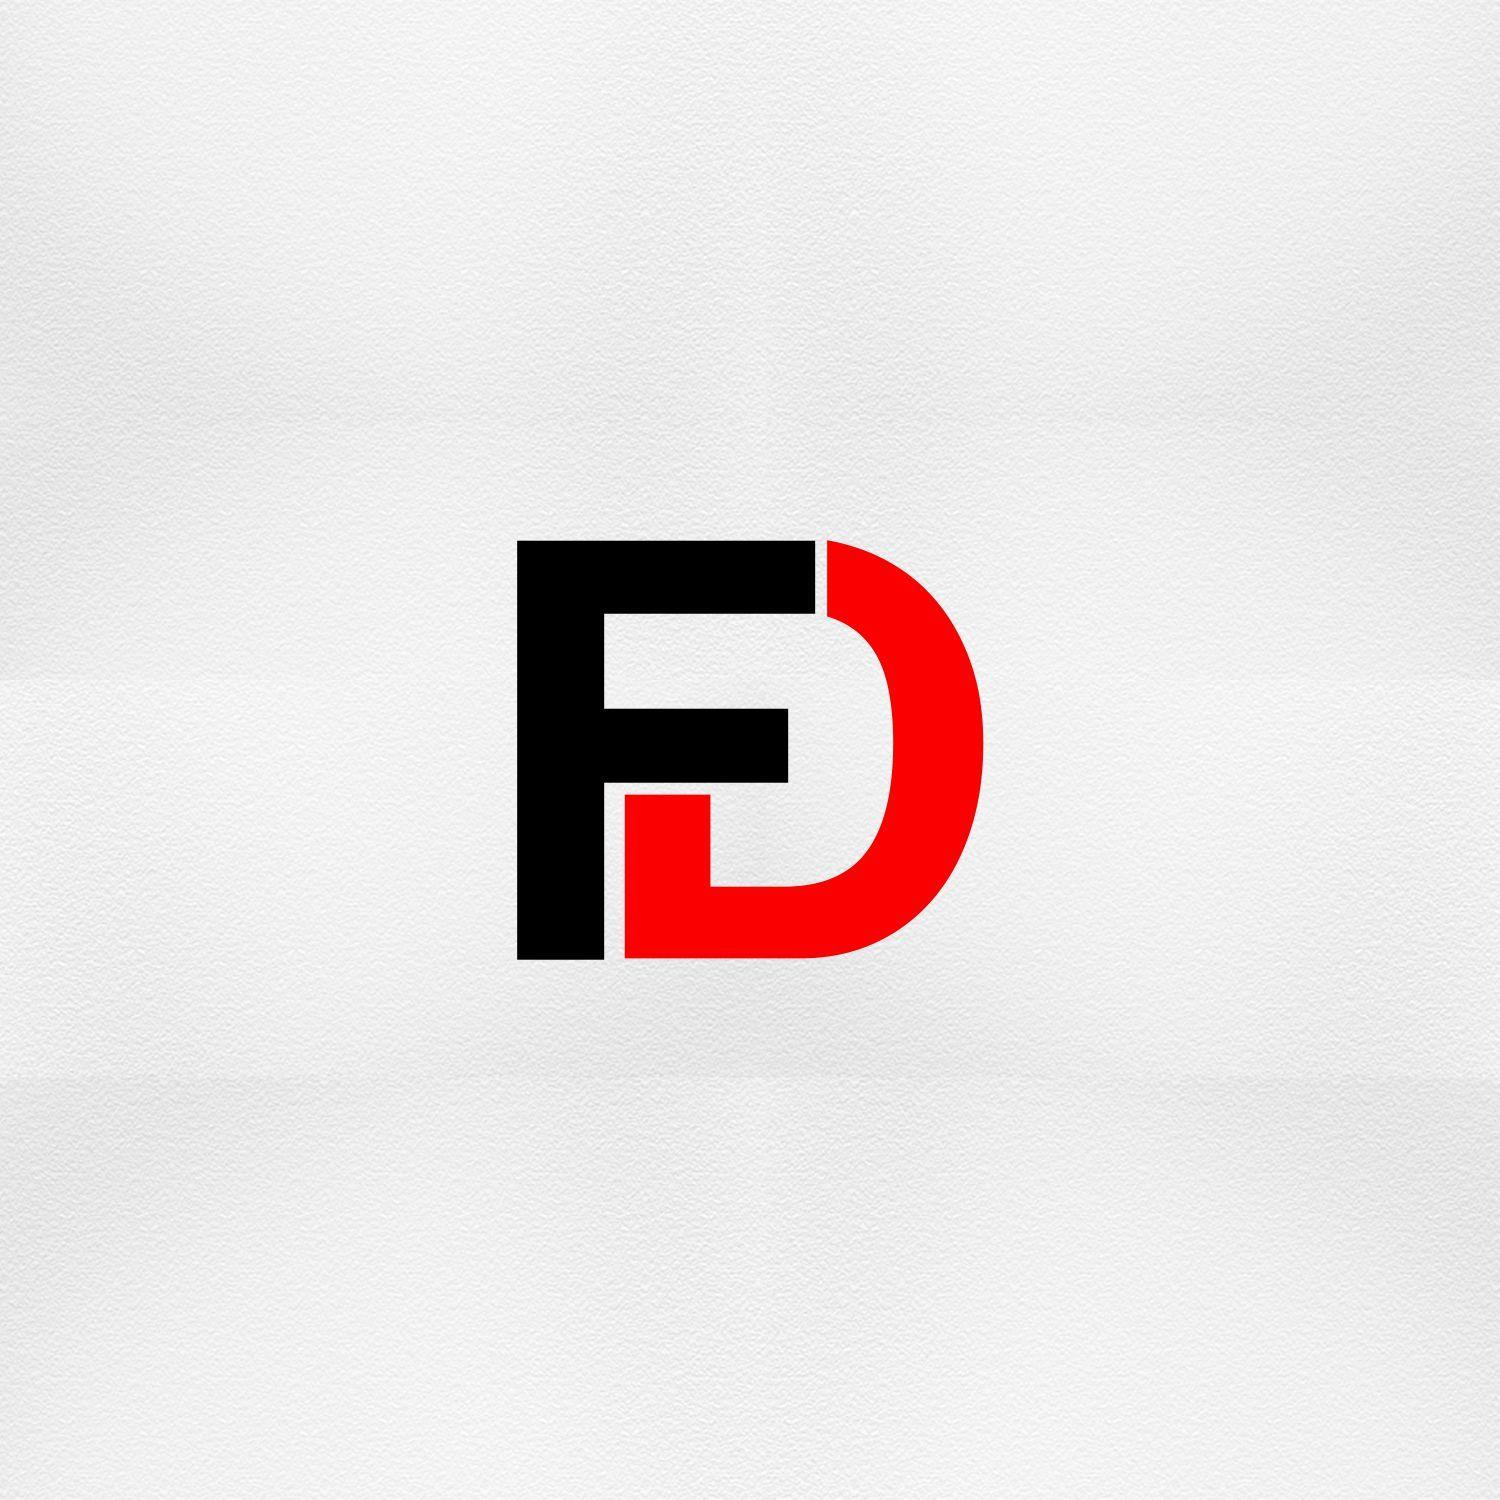 Fd Logo - Bold, Modern, Home Builder Logo Design for FD by White sky | Design ...